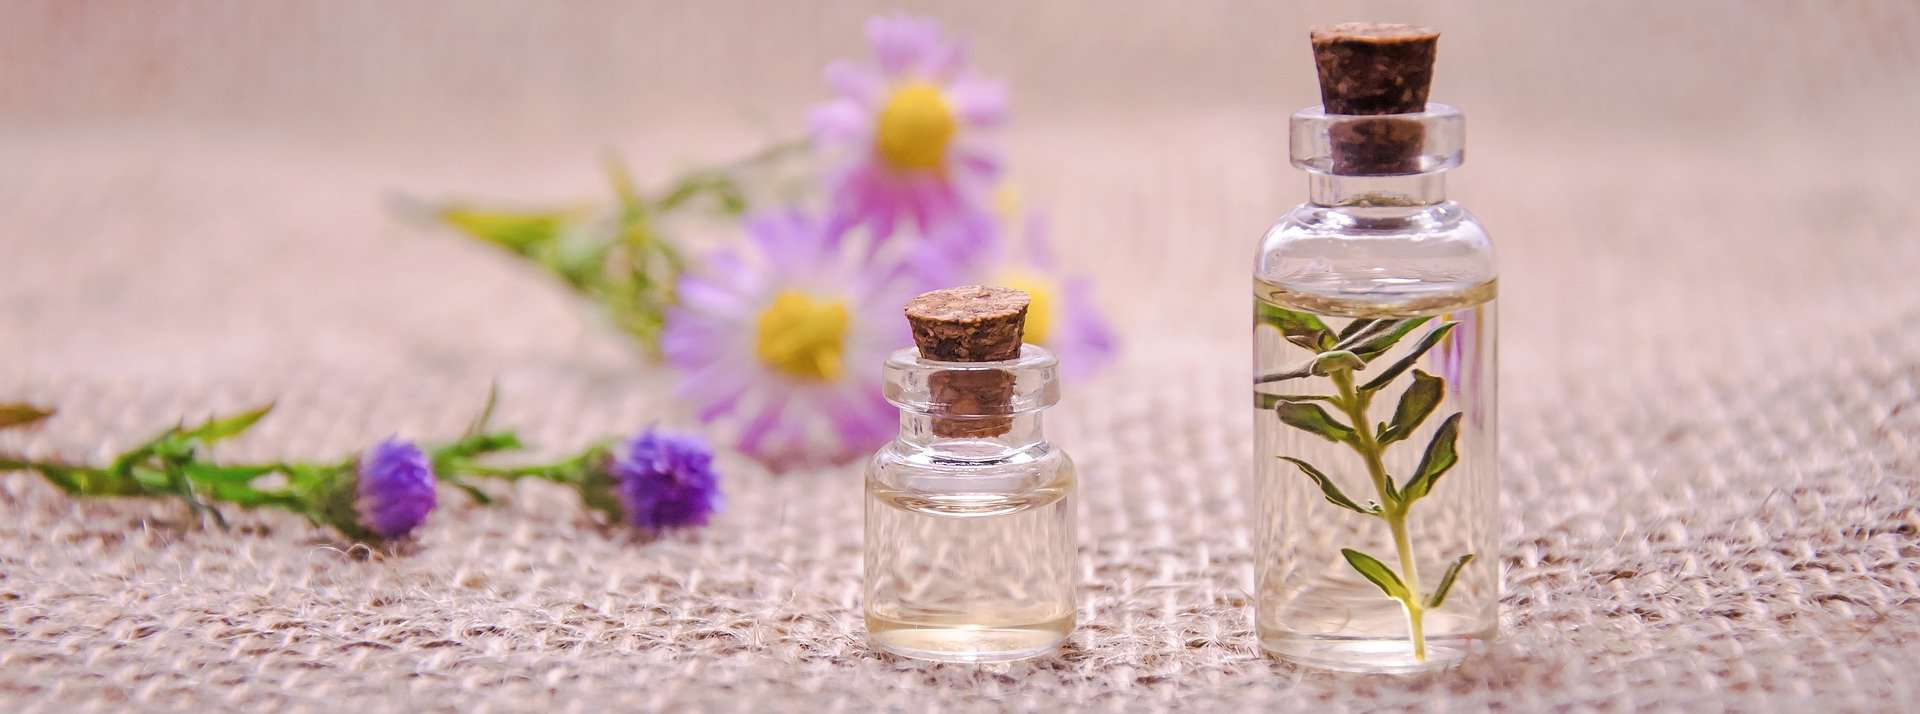 huiles essentielles aromathérapie